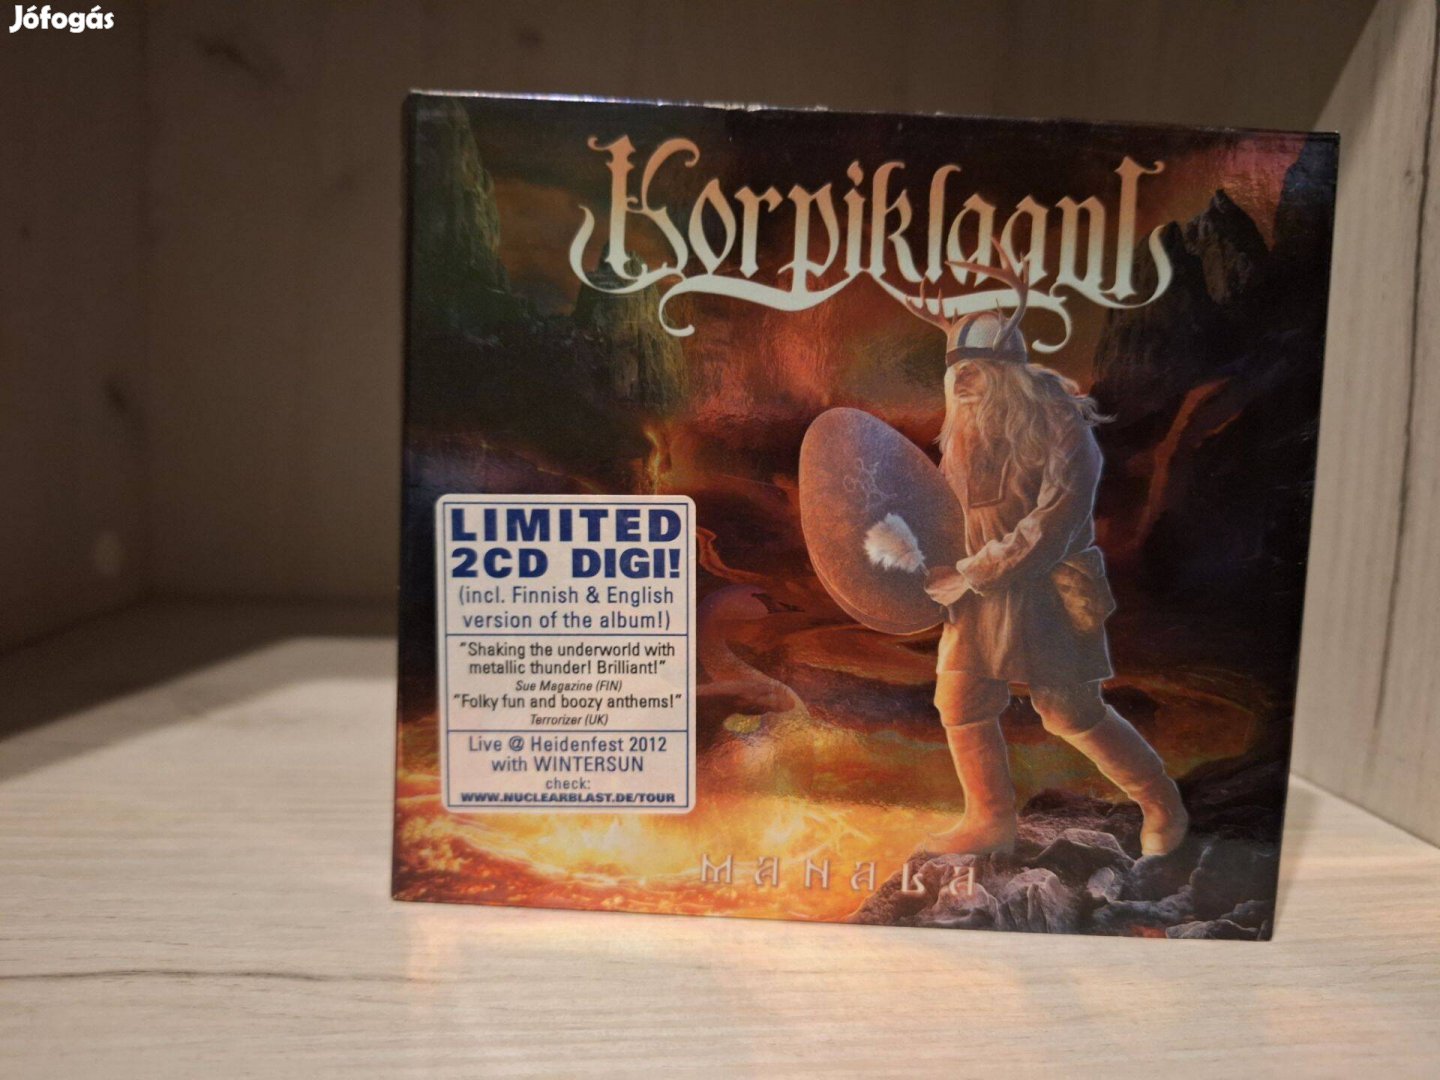 Korpiklaani - Manala - dupla CD - Limited Edition, Digipak